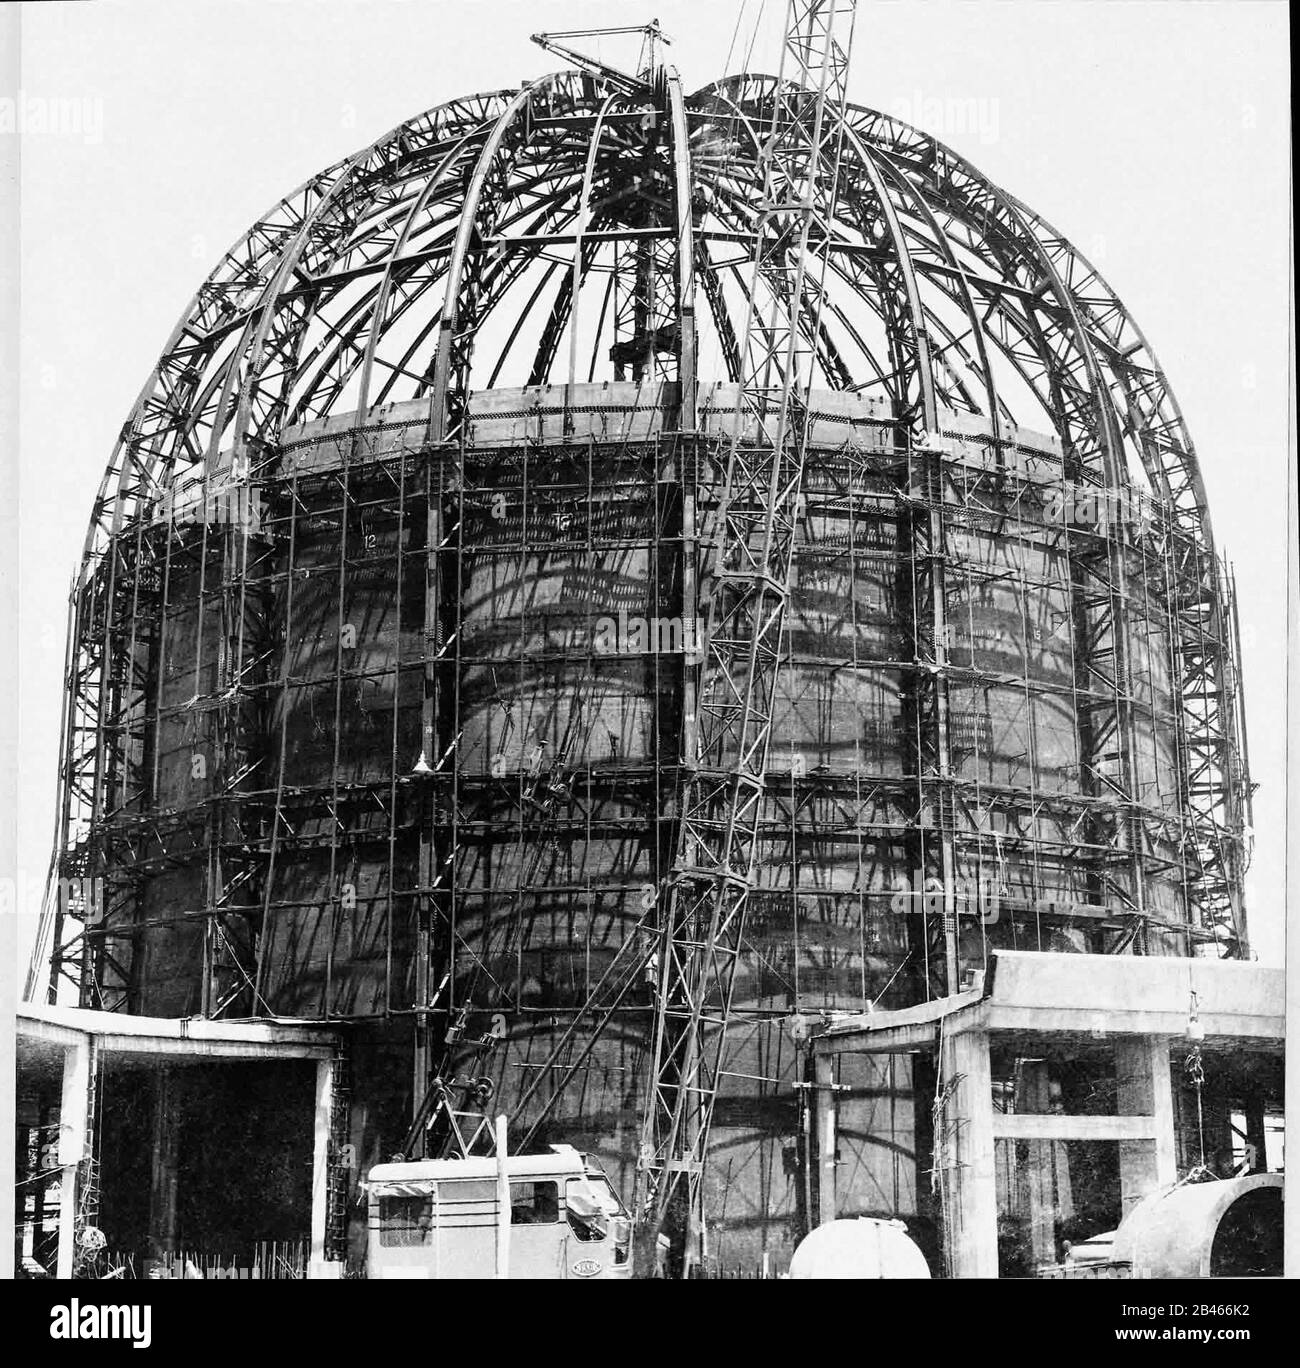 BARC Atomic Reactor, Trombay, under construction, Bombay, Mumbai, Maharashtra, India, Asia, 1957, 1961, old vintage 1900s picture Stock Photo